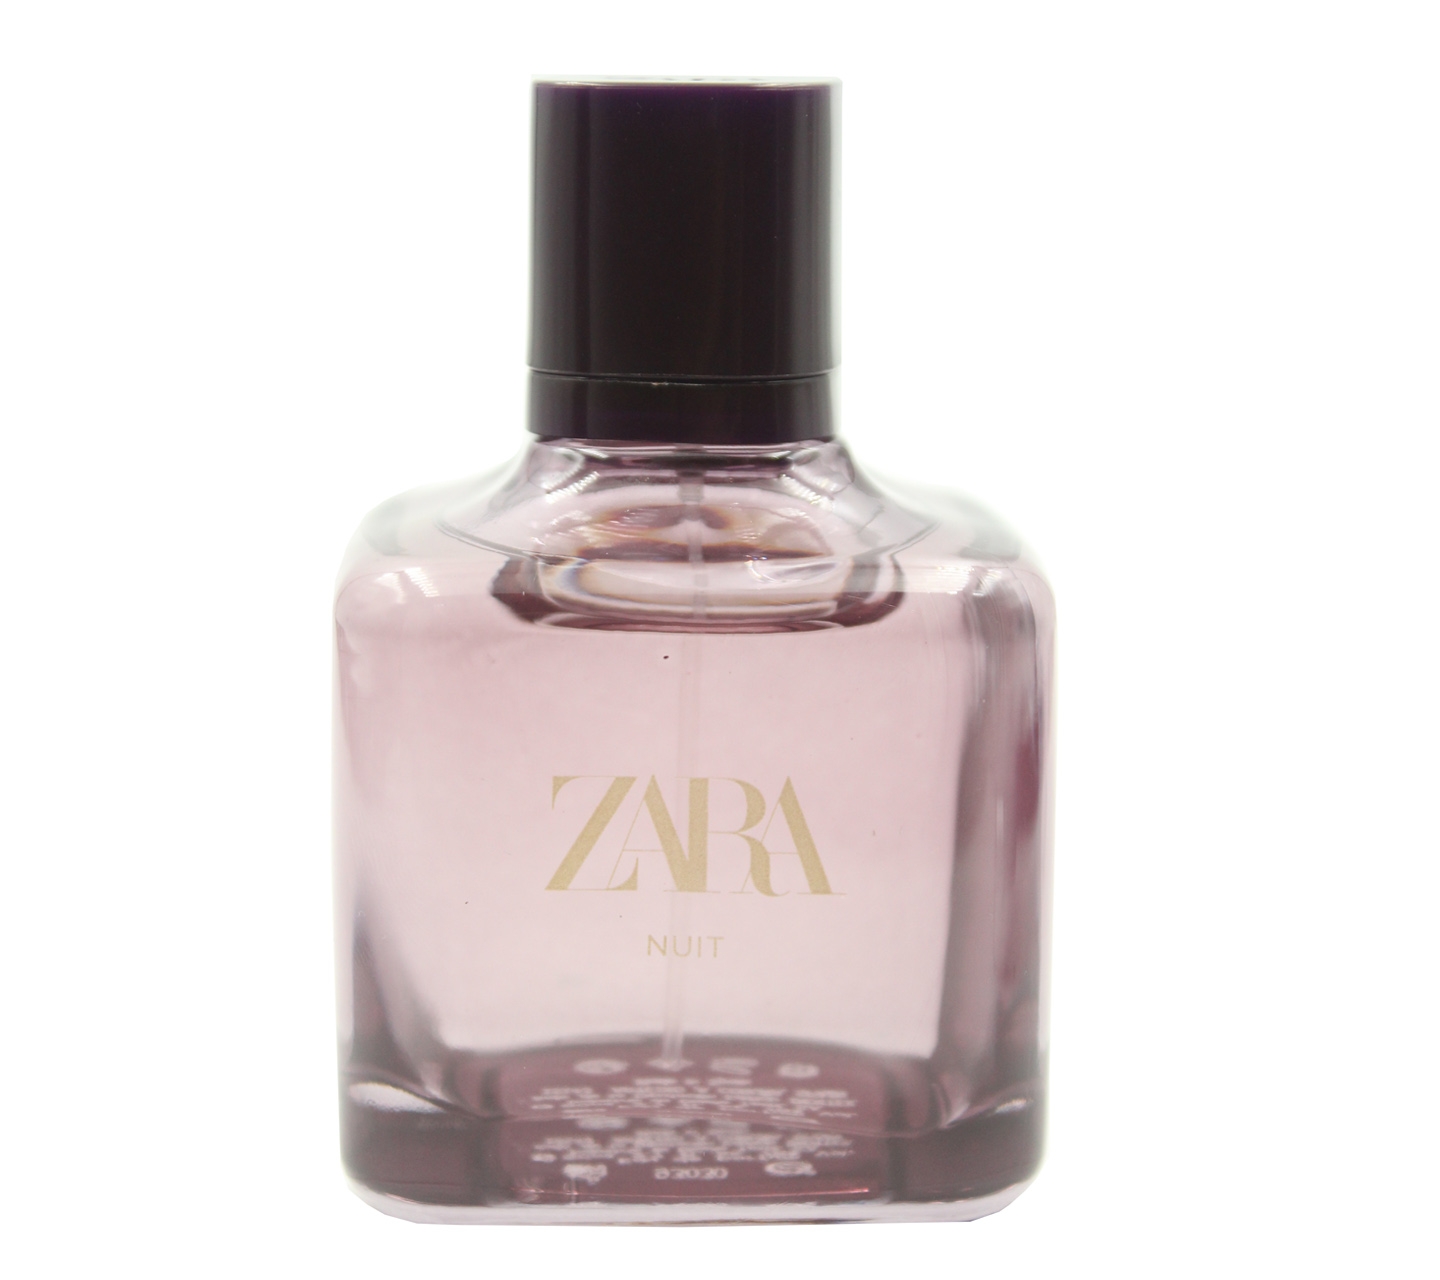 Zara Nuit Fragrance